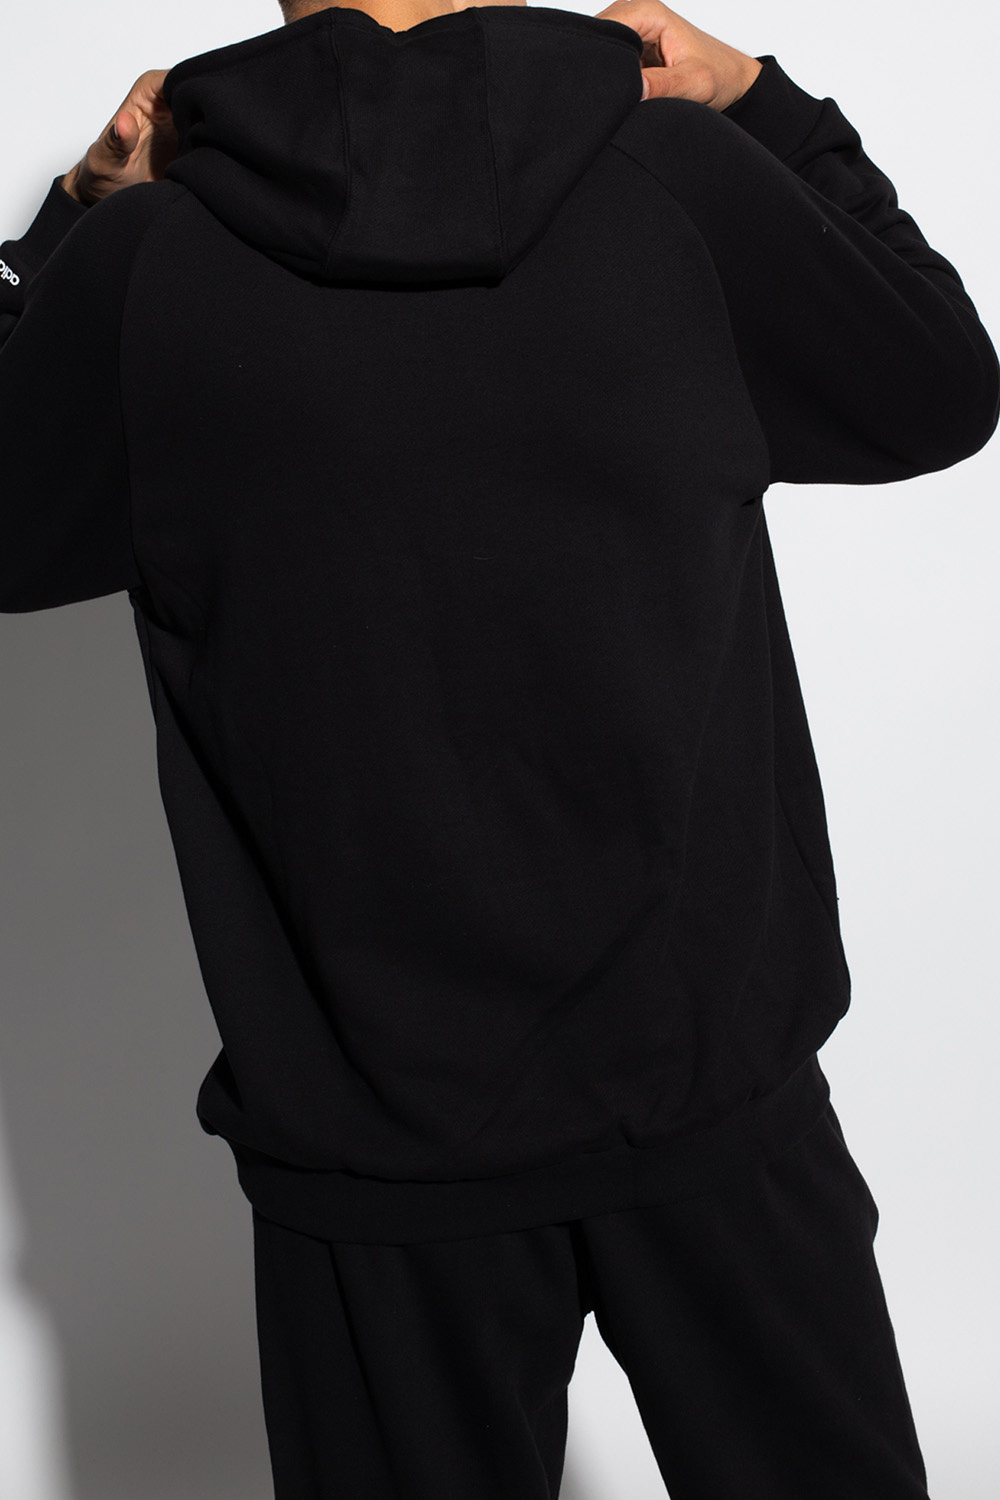 adidas tape pants black dress shoes free Logo hoodie crossfit ADIDAS Originals - IetpShops Finland